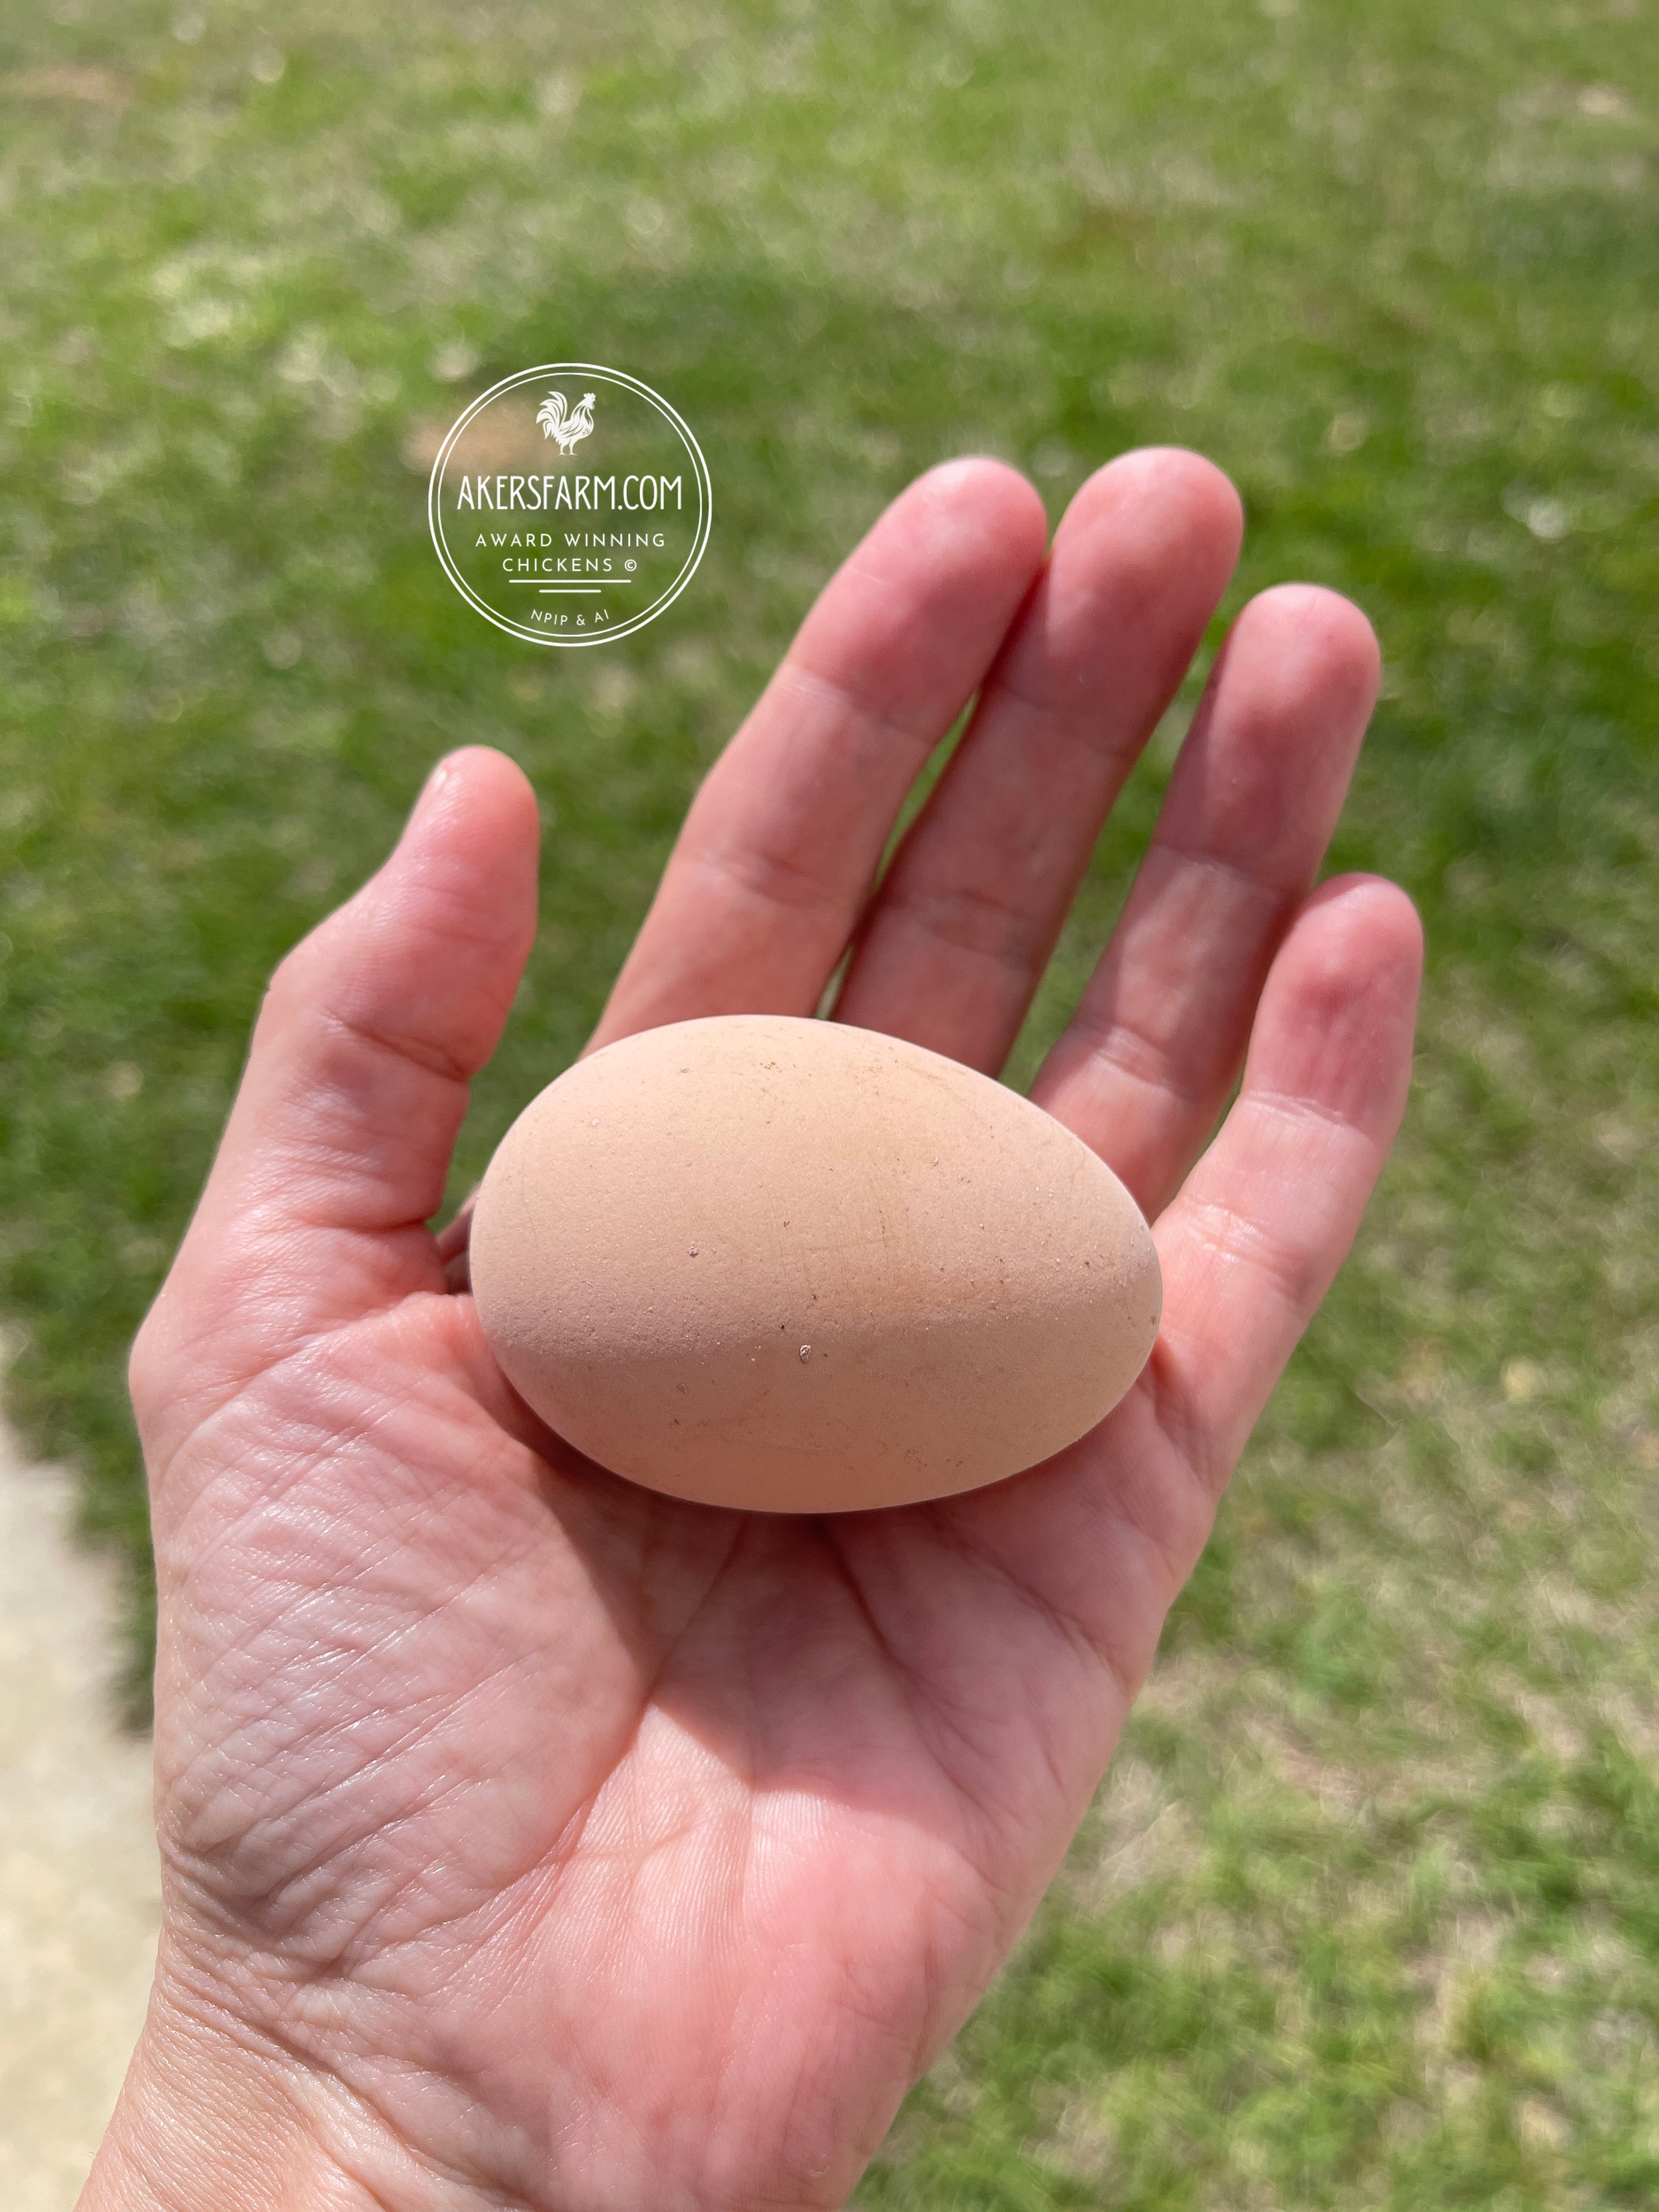 Blue/Black/Splash Partridge Brahma Hatching Eggs – Akers Farm